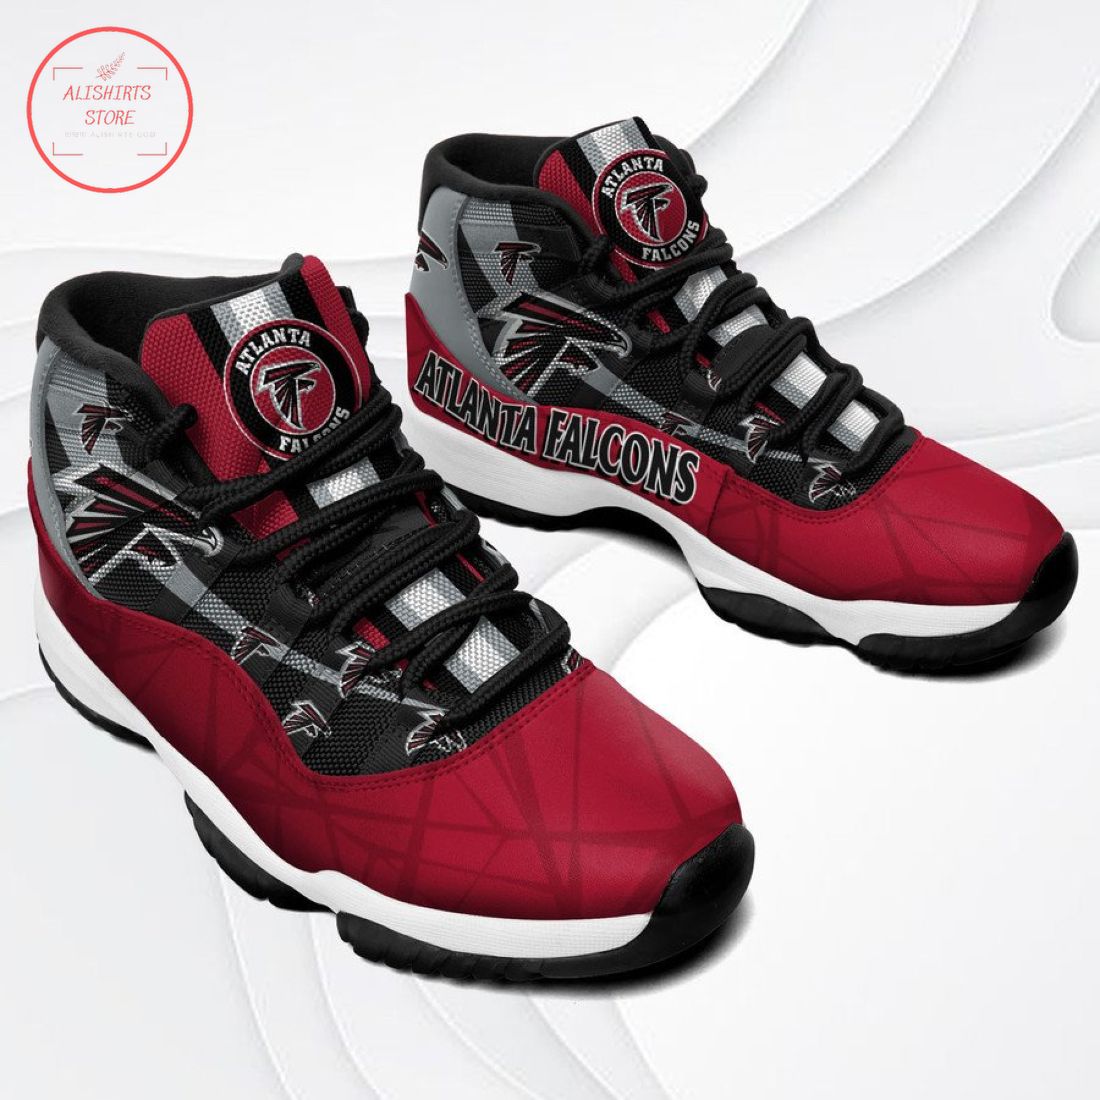 NFL Atlanta Falcons New Air Jordan 11 Sneakers Shoes